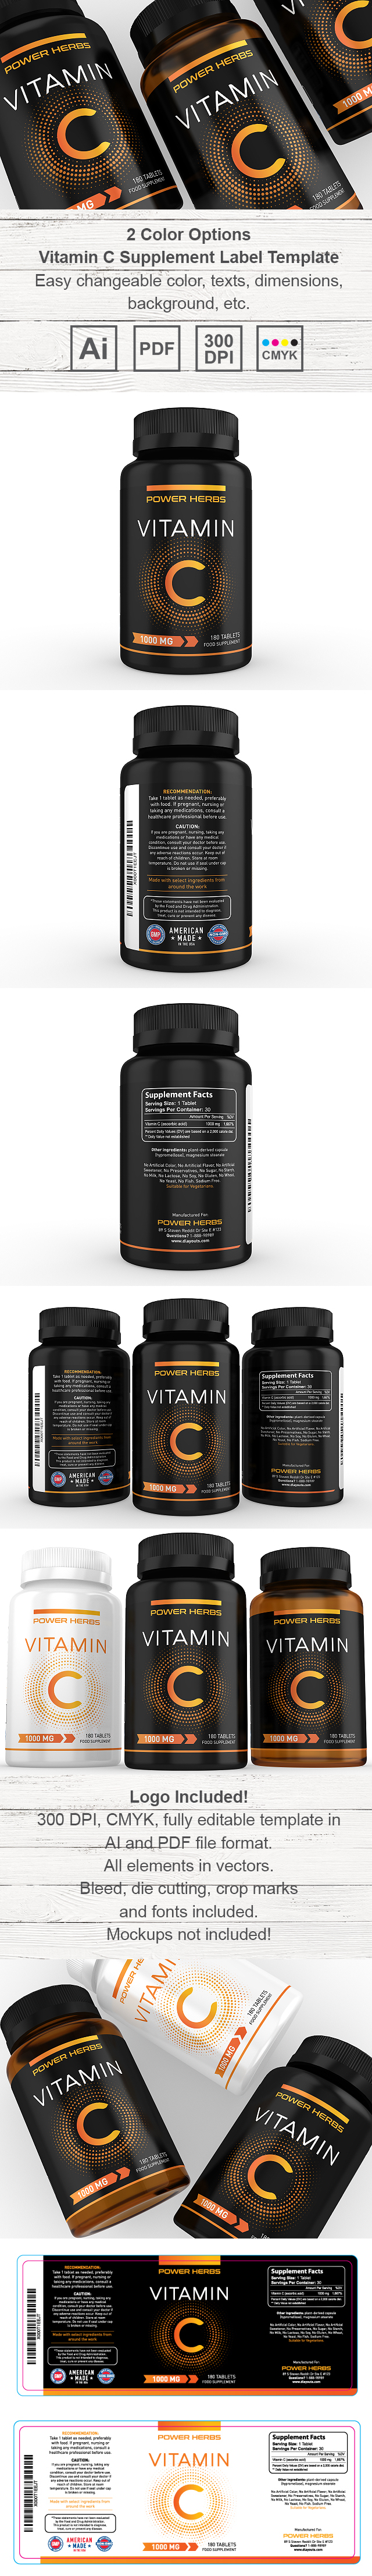 Vitamin C Supplement Label Template